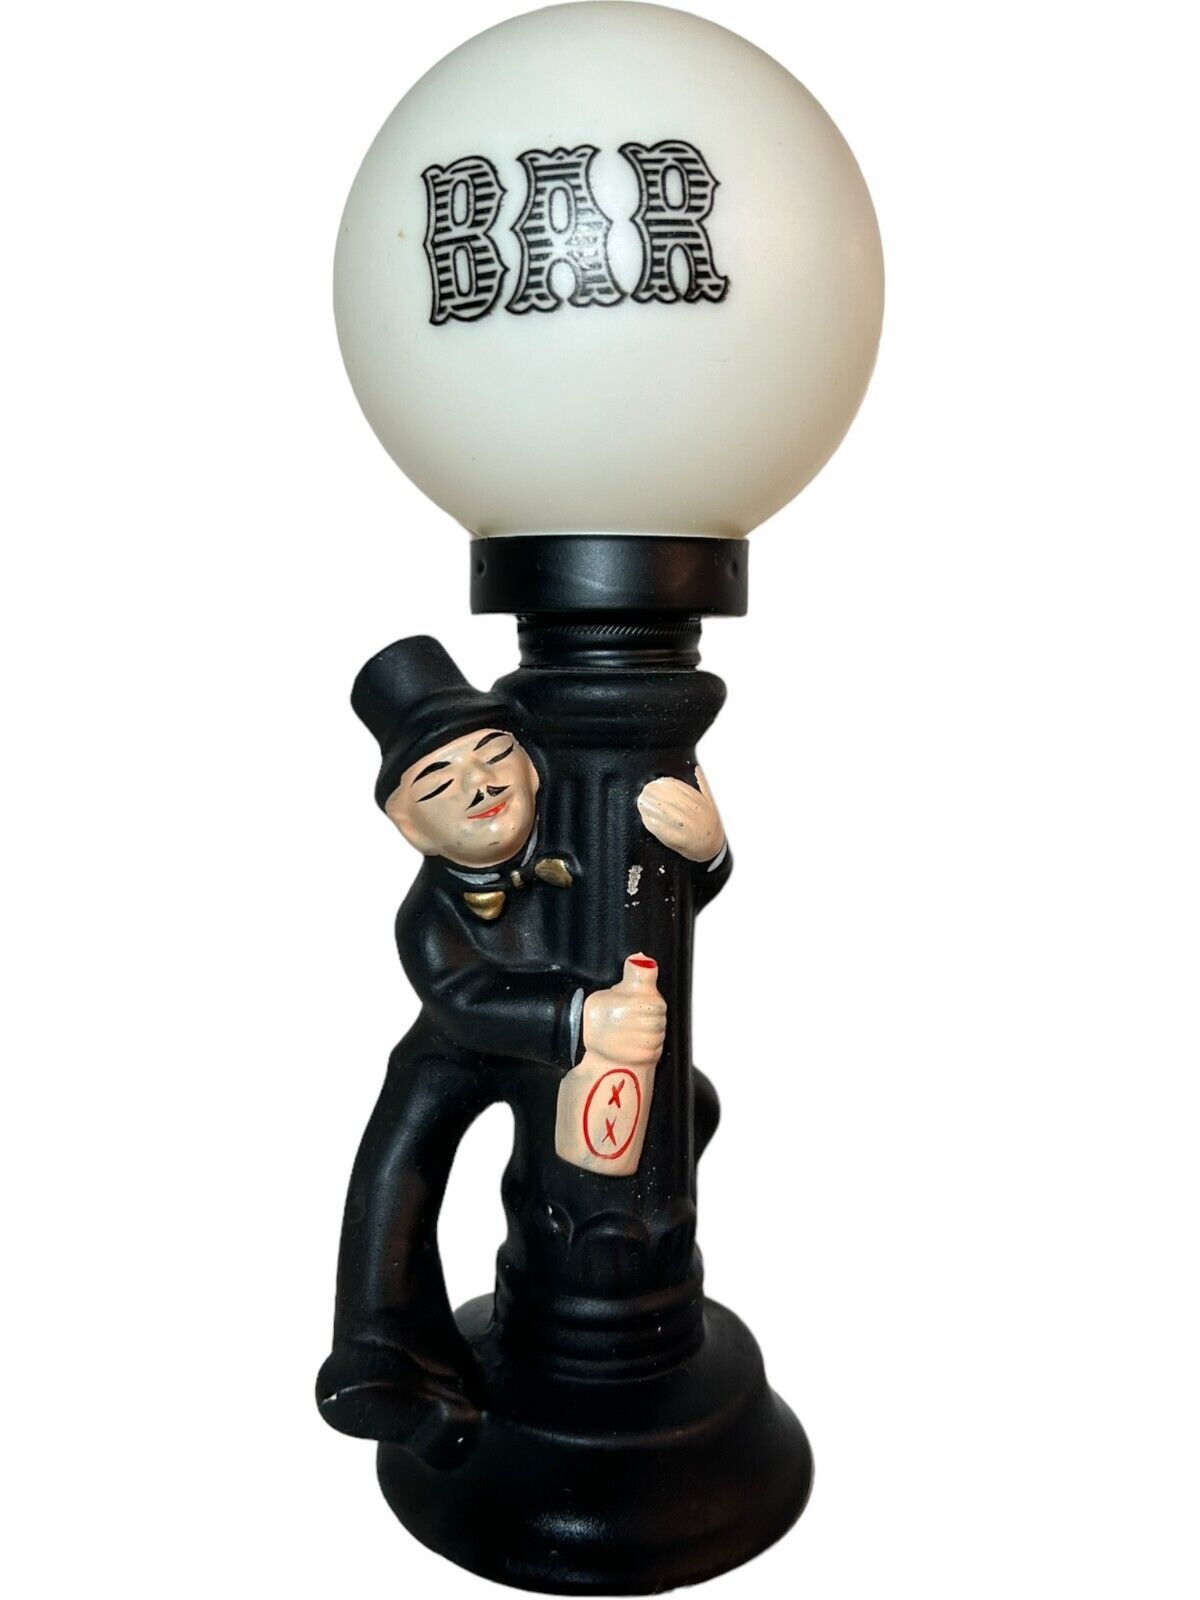 VTG Barware Lamp Drunk Charlie Chaplin Lamp Post Price Import Japan Table Light